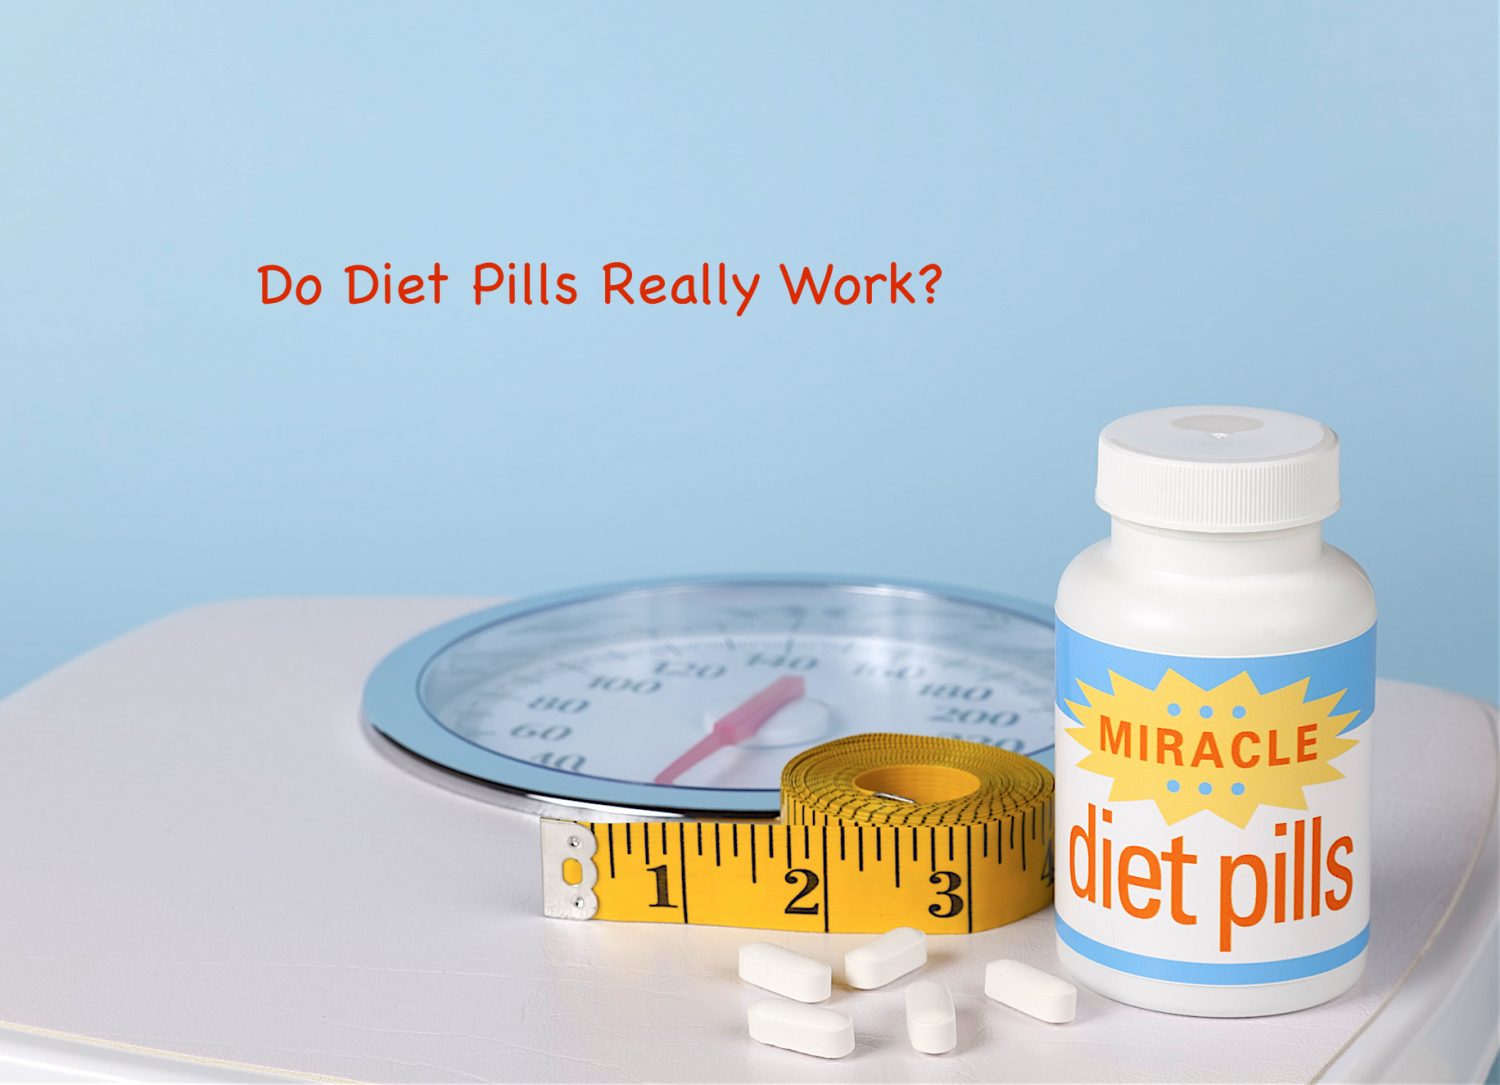 Do diet pills really work?